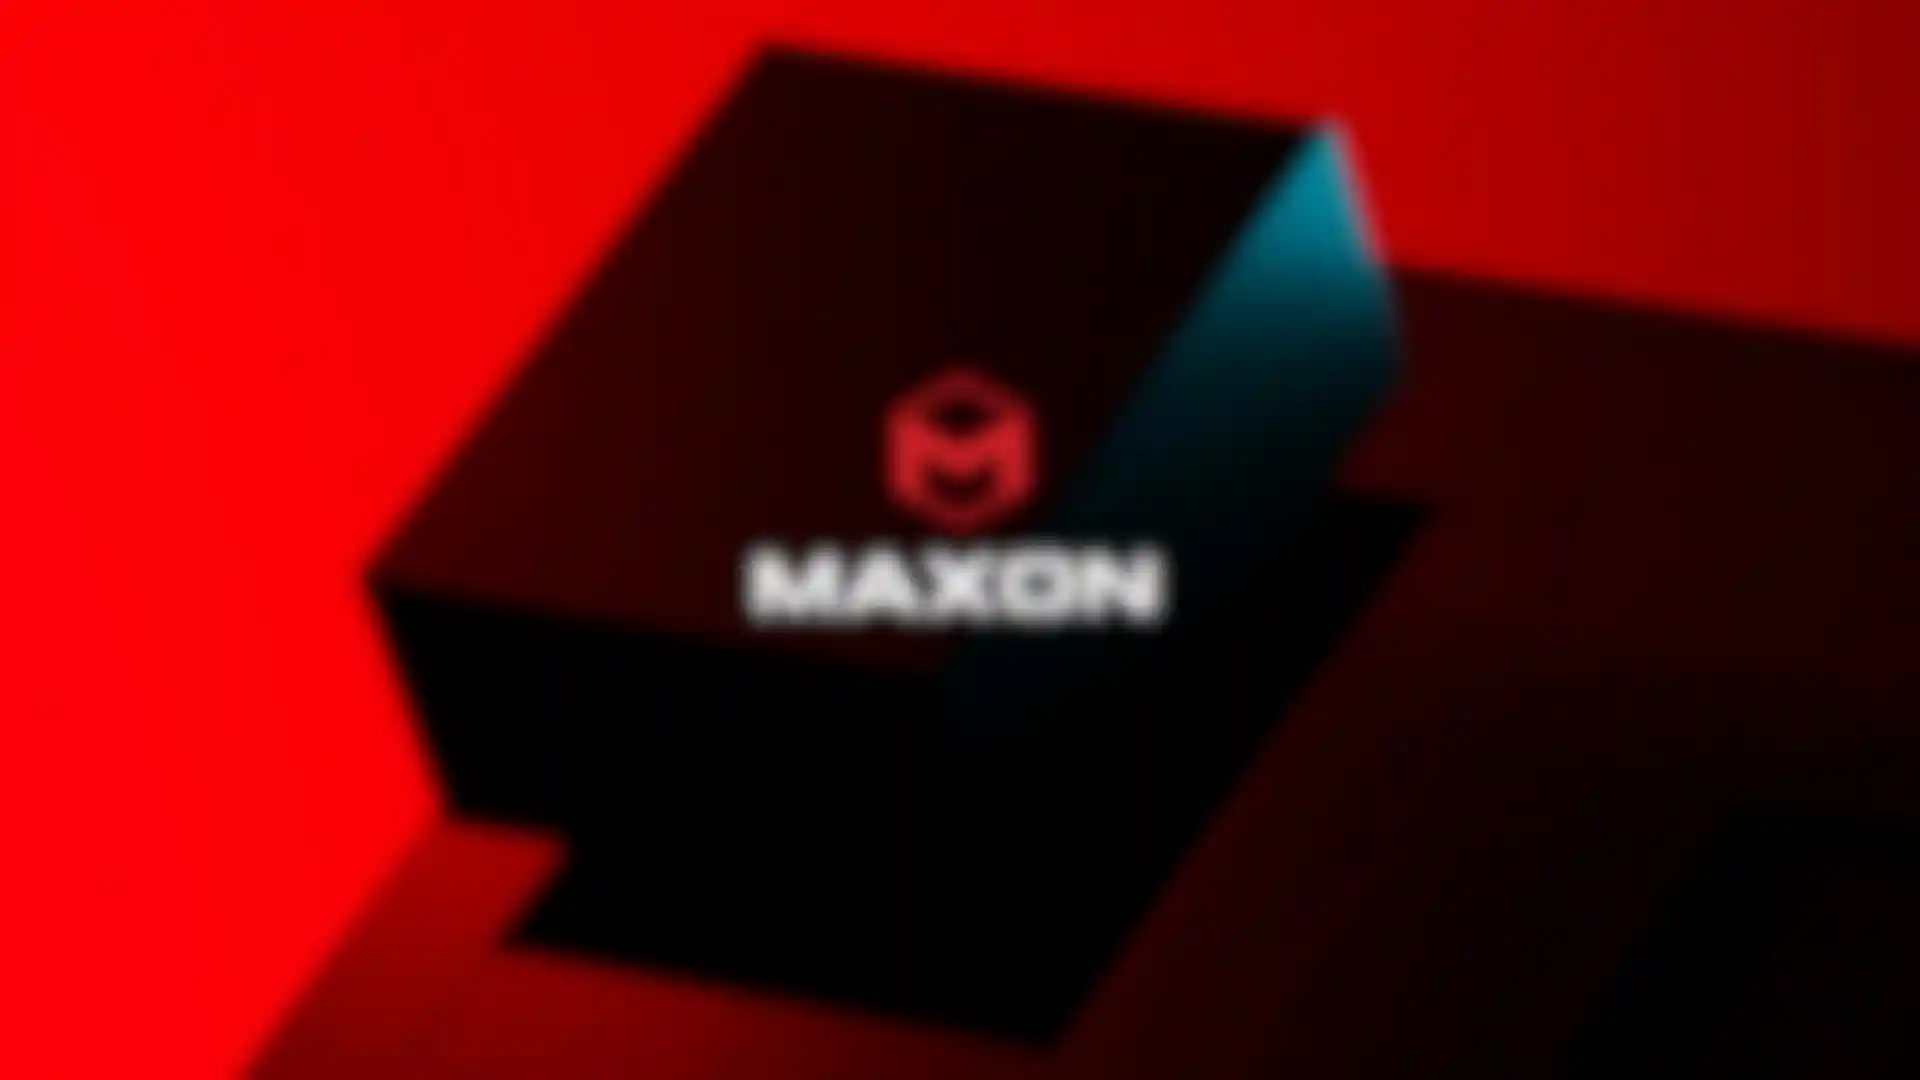 Maxon Svela la Nuova Corporate Identity image